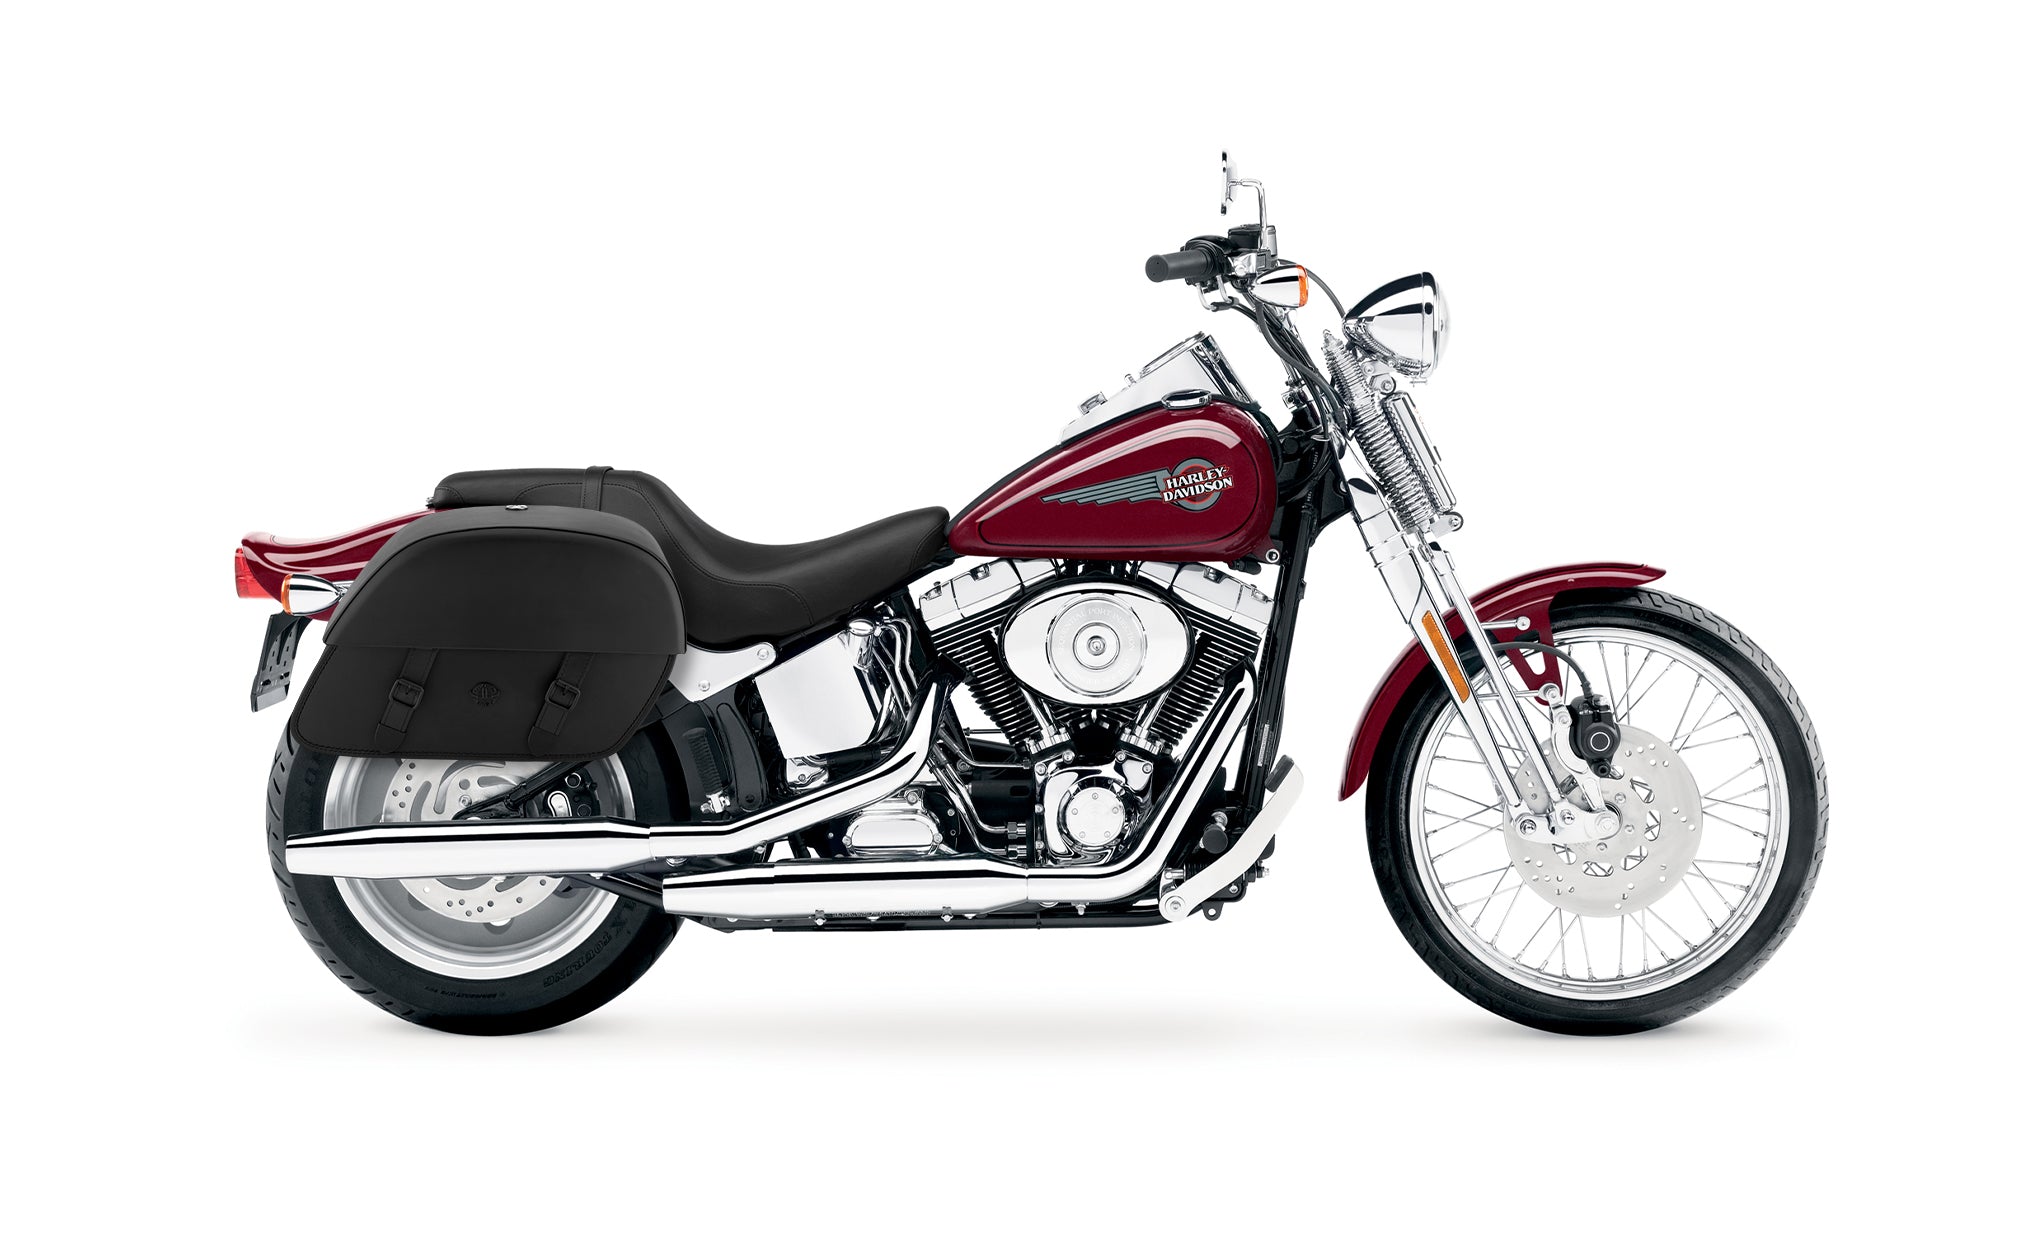 Viking Baelor Large Leather Motorcycle Saddlebags For Harley Davidson Softail Springer Fxsts I on Bike Photo @expand